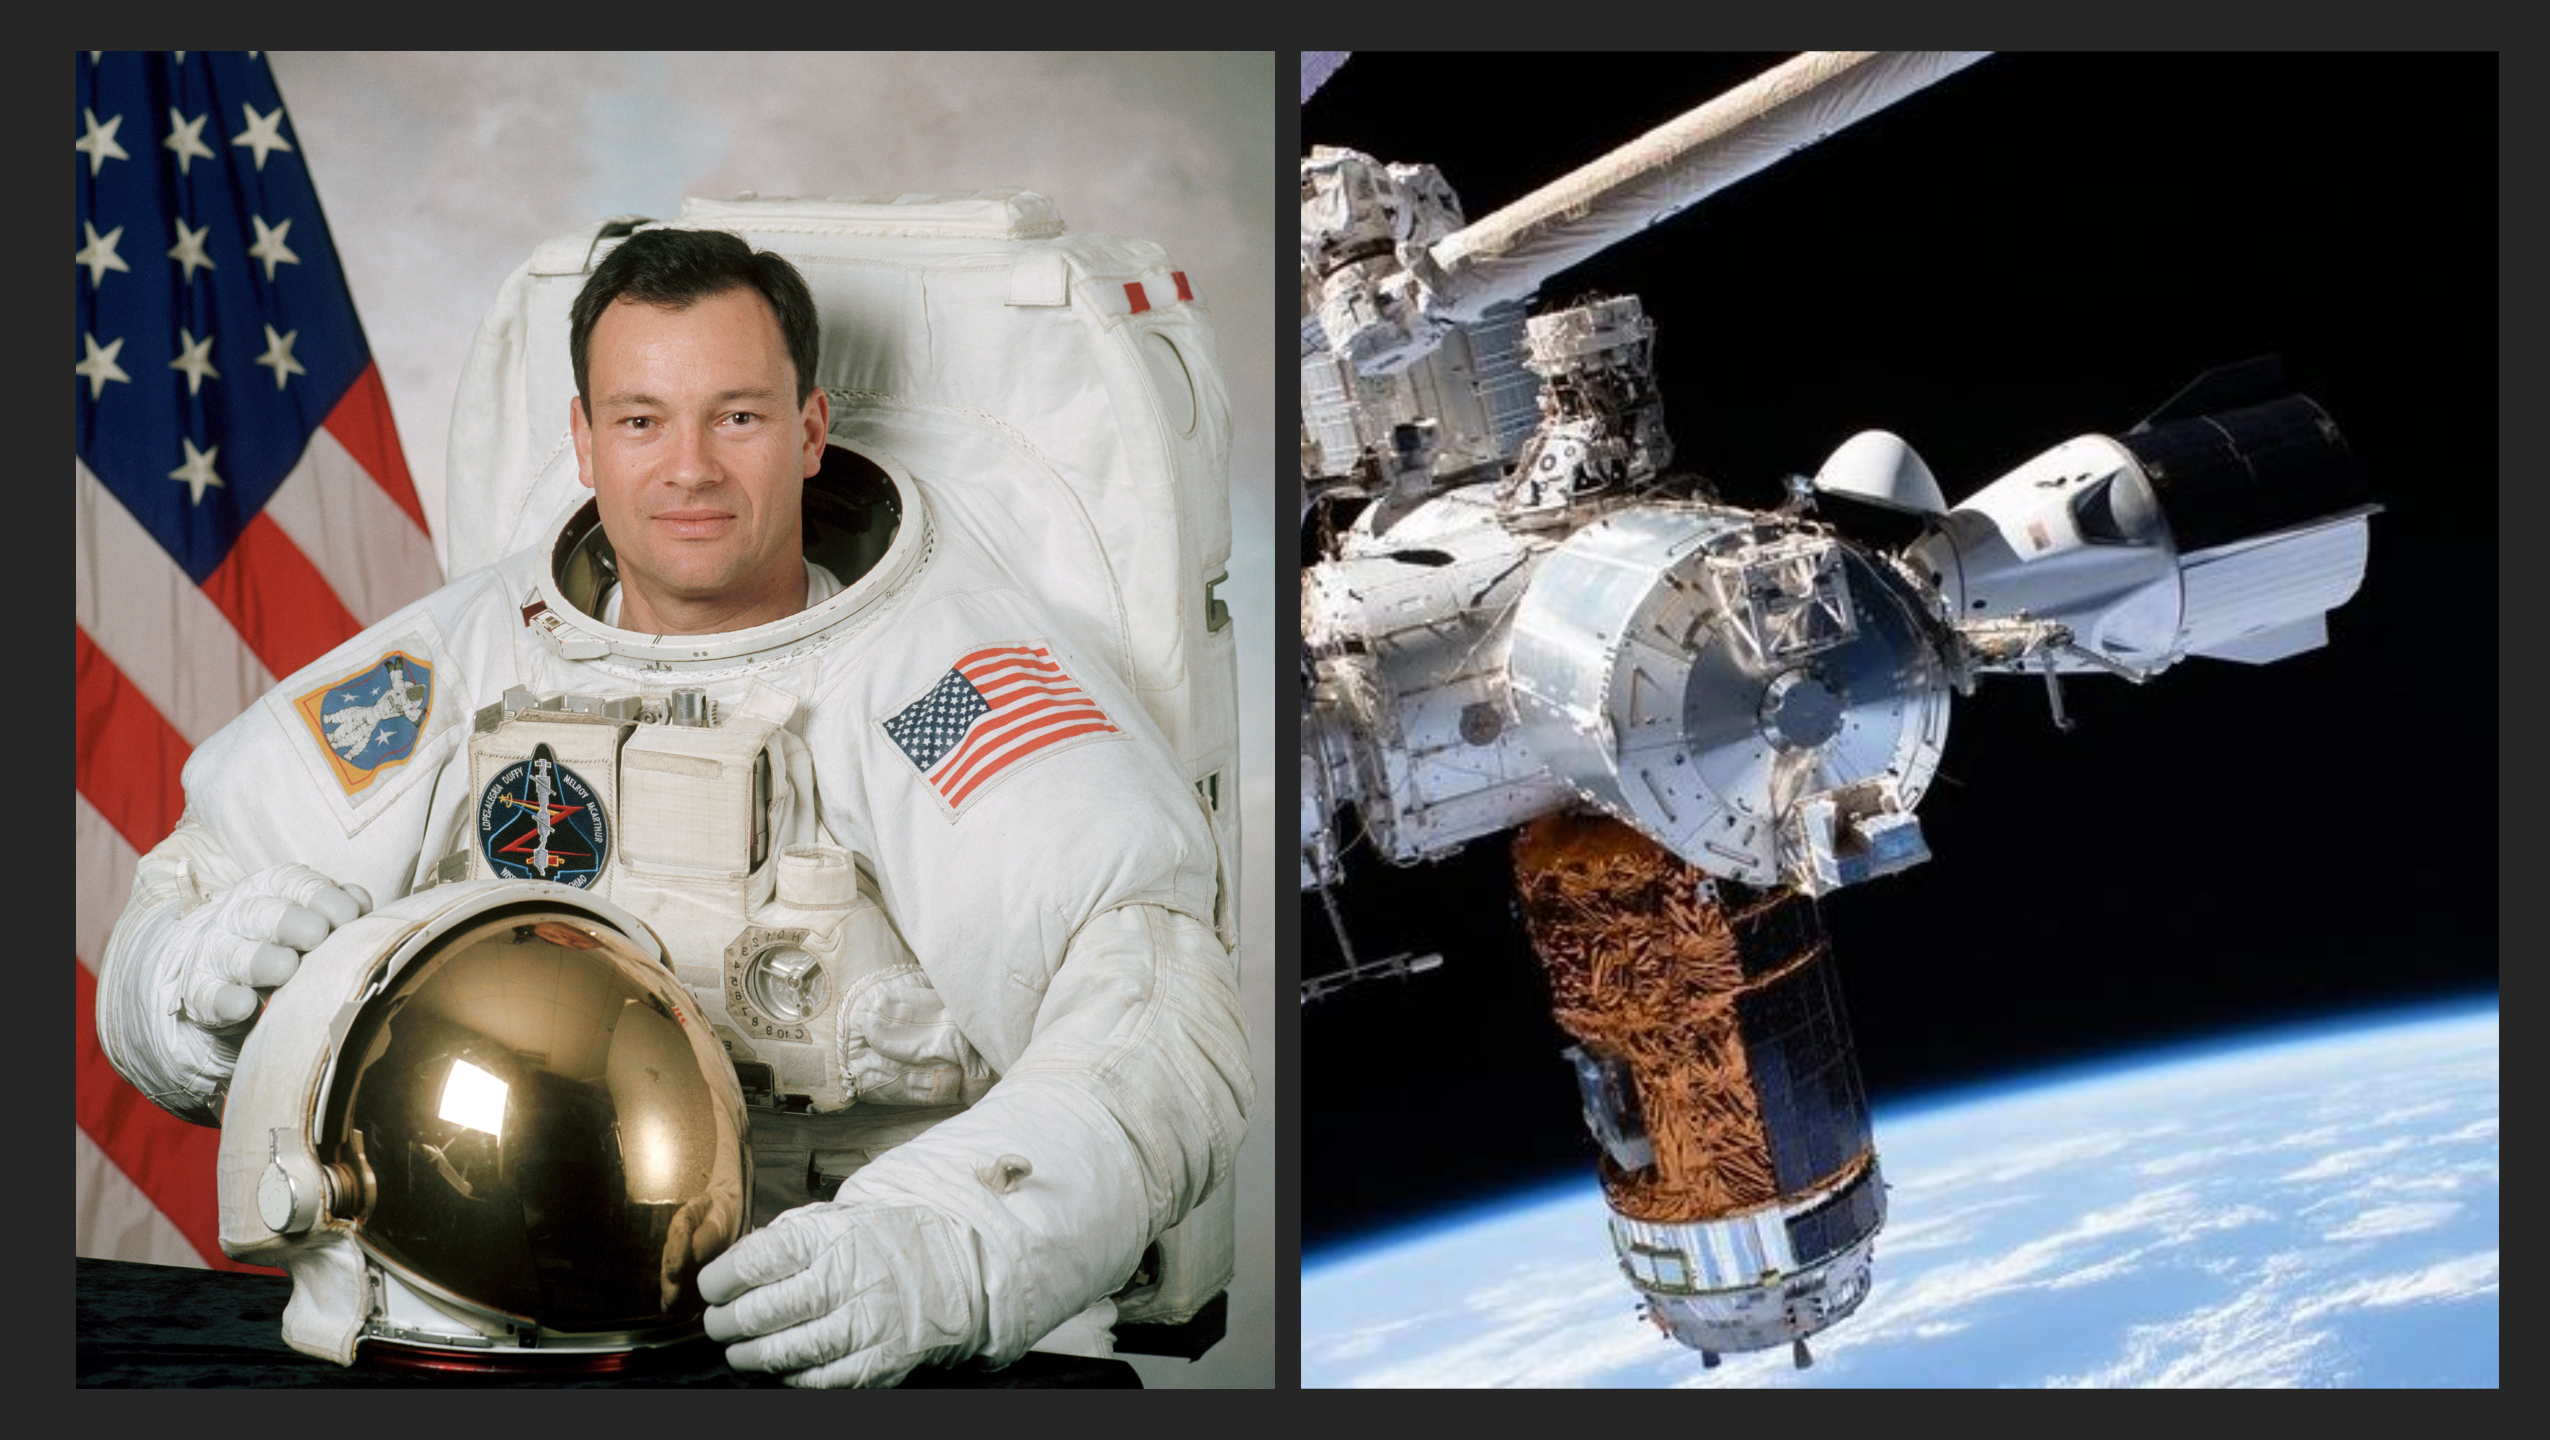 Former NASA Astronaut will be Commander of Axiom's civilian flight aboard SpaceX's Crew Dragon